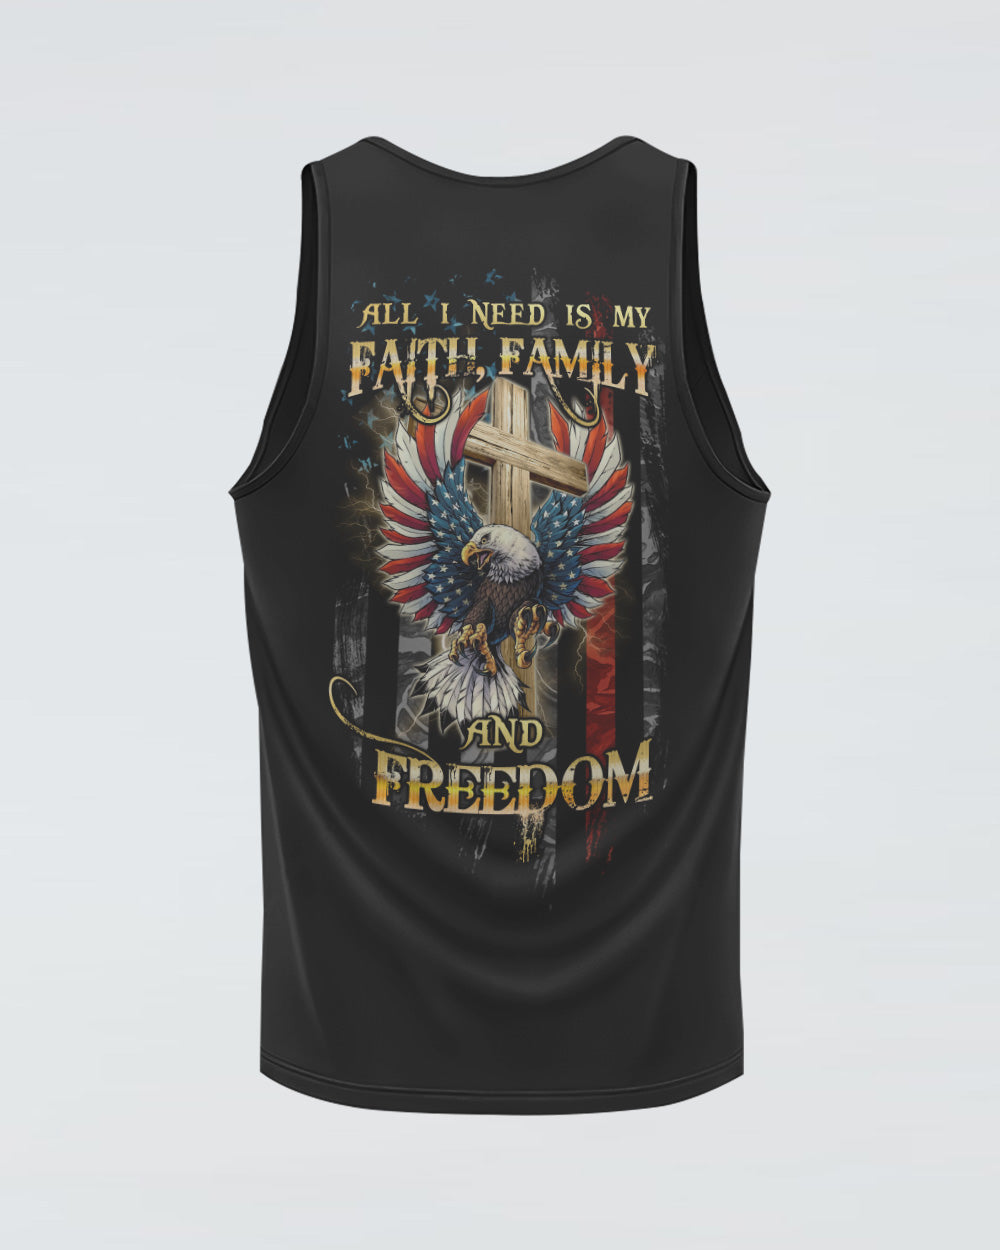 All I Need Is My Faith Family And Freedom Cross Eagle Flag Women's Christian Tanks